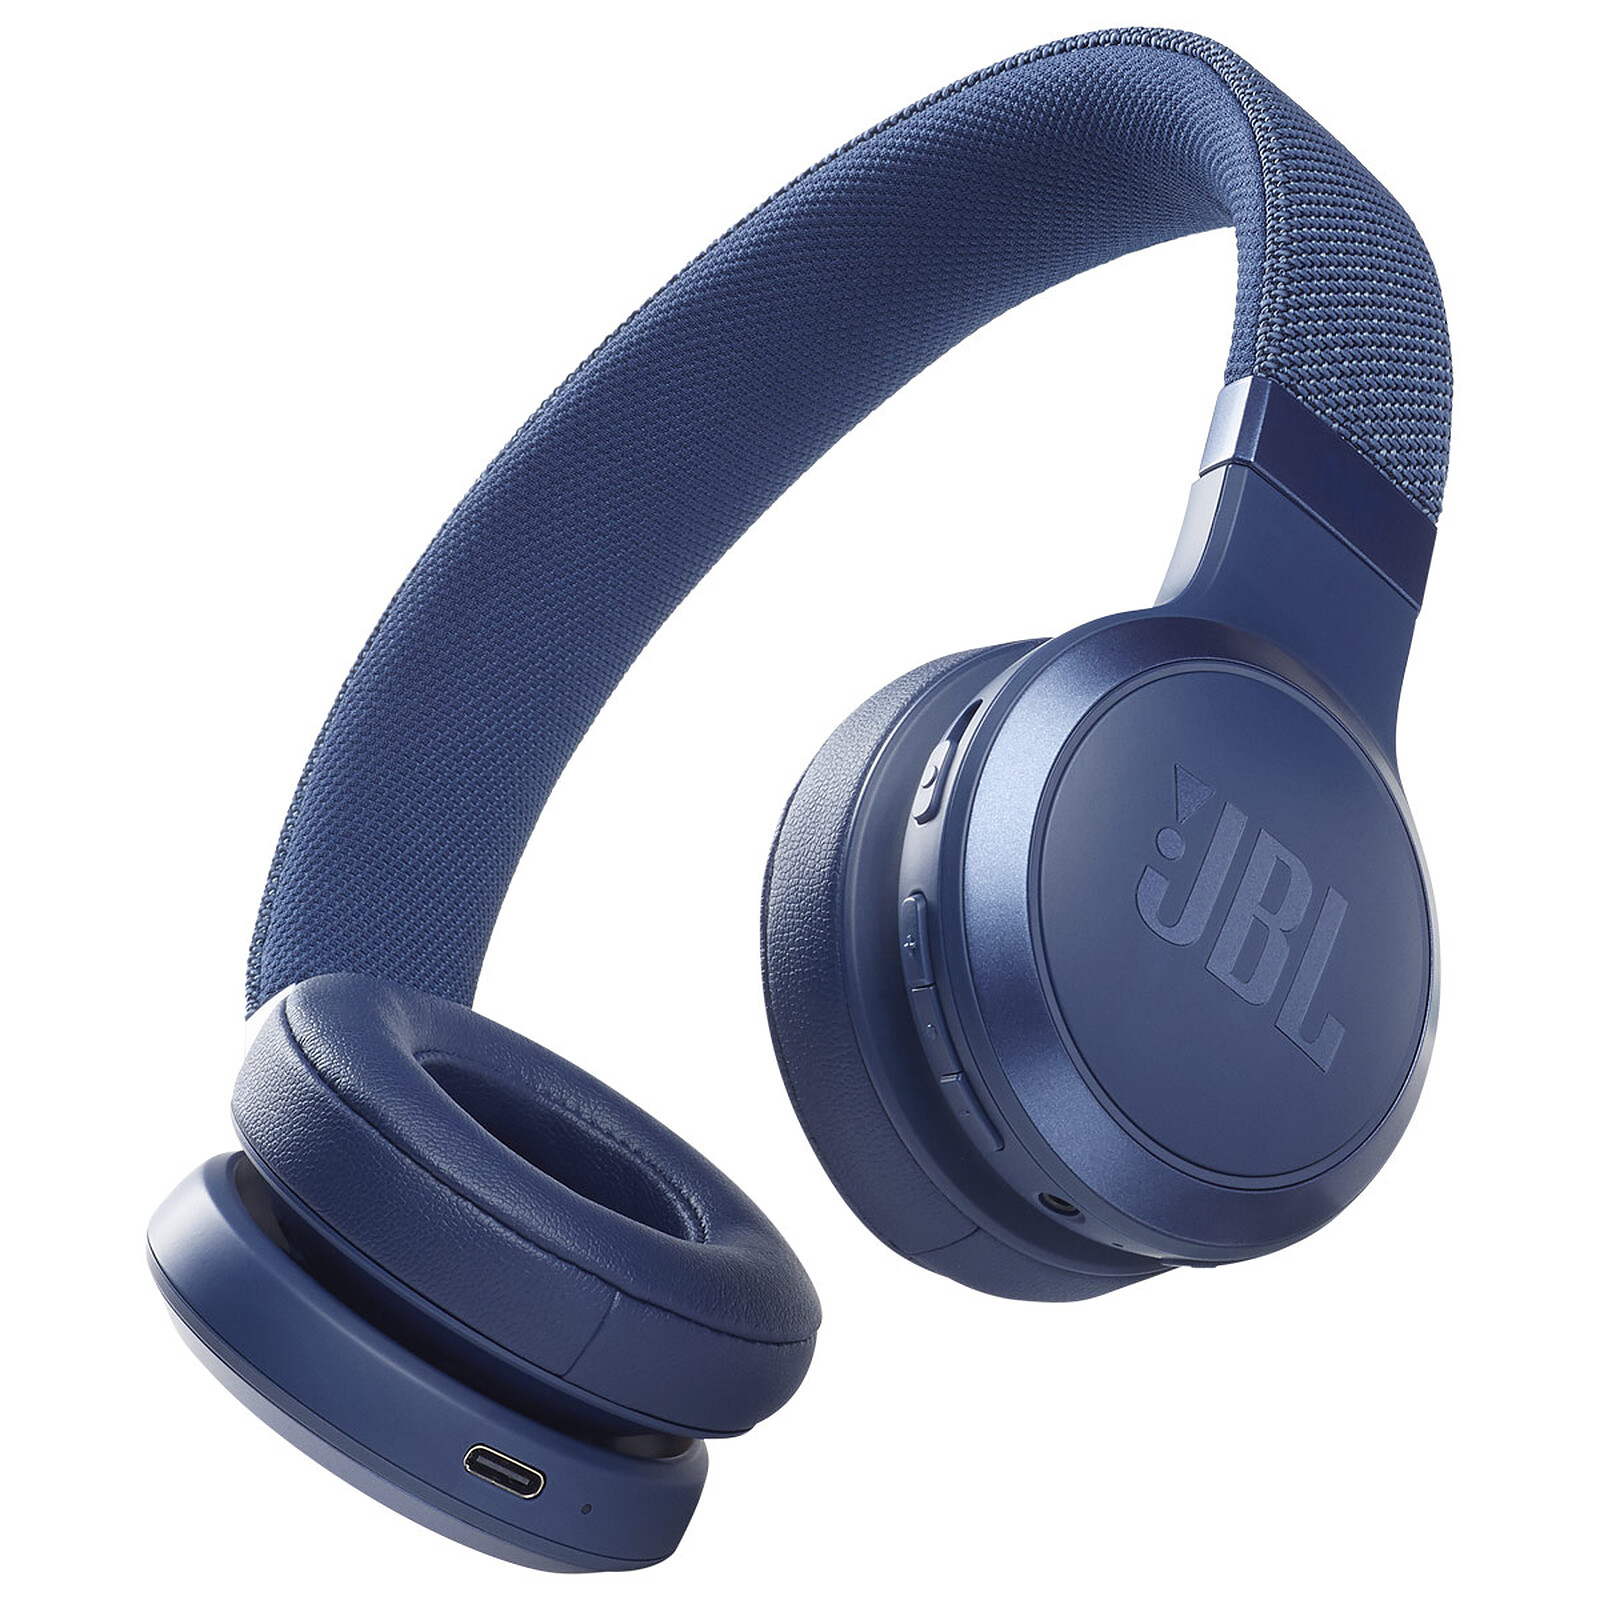 JBL Headphone LIVE 770 NC Blue